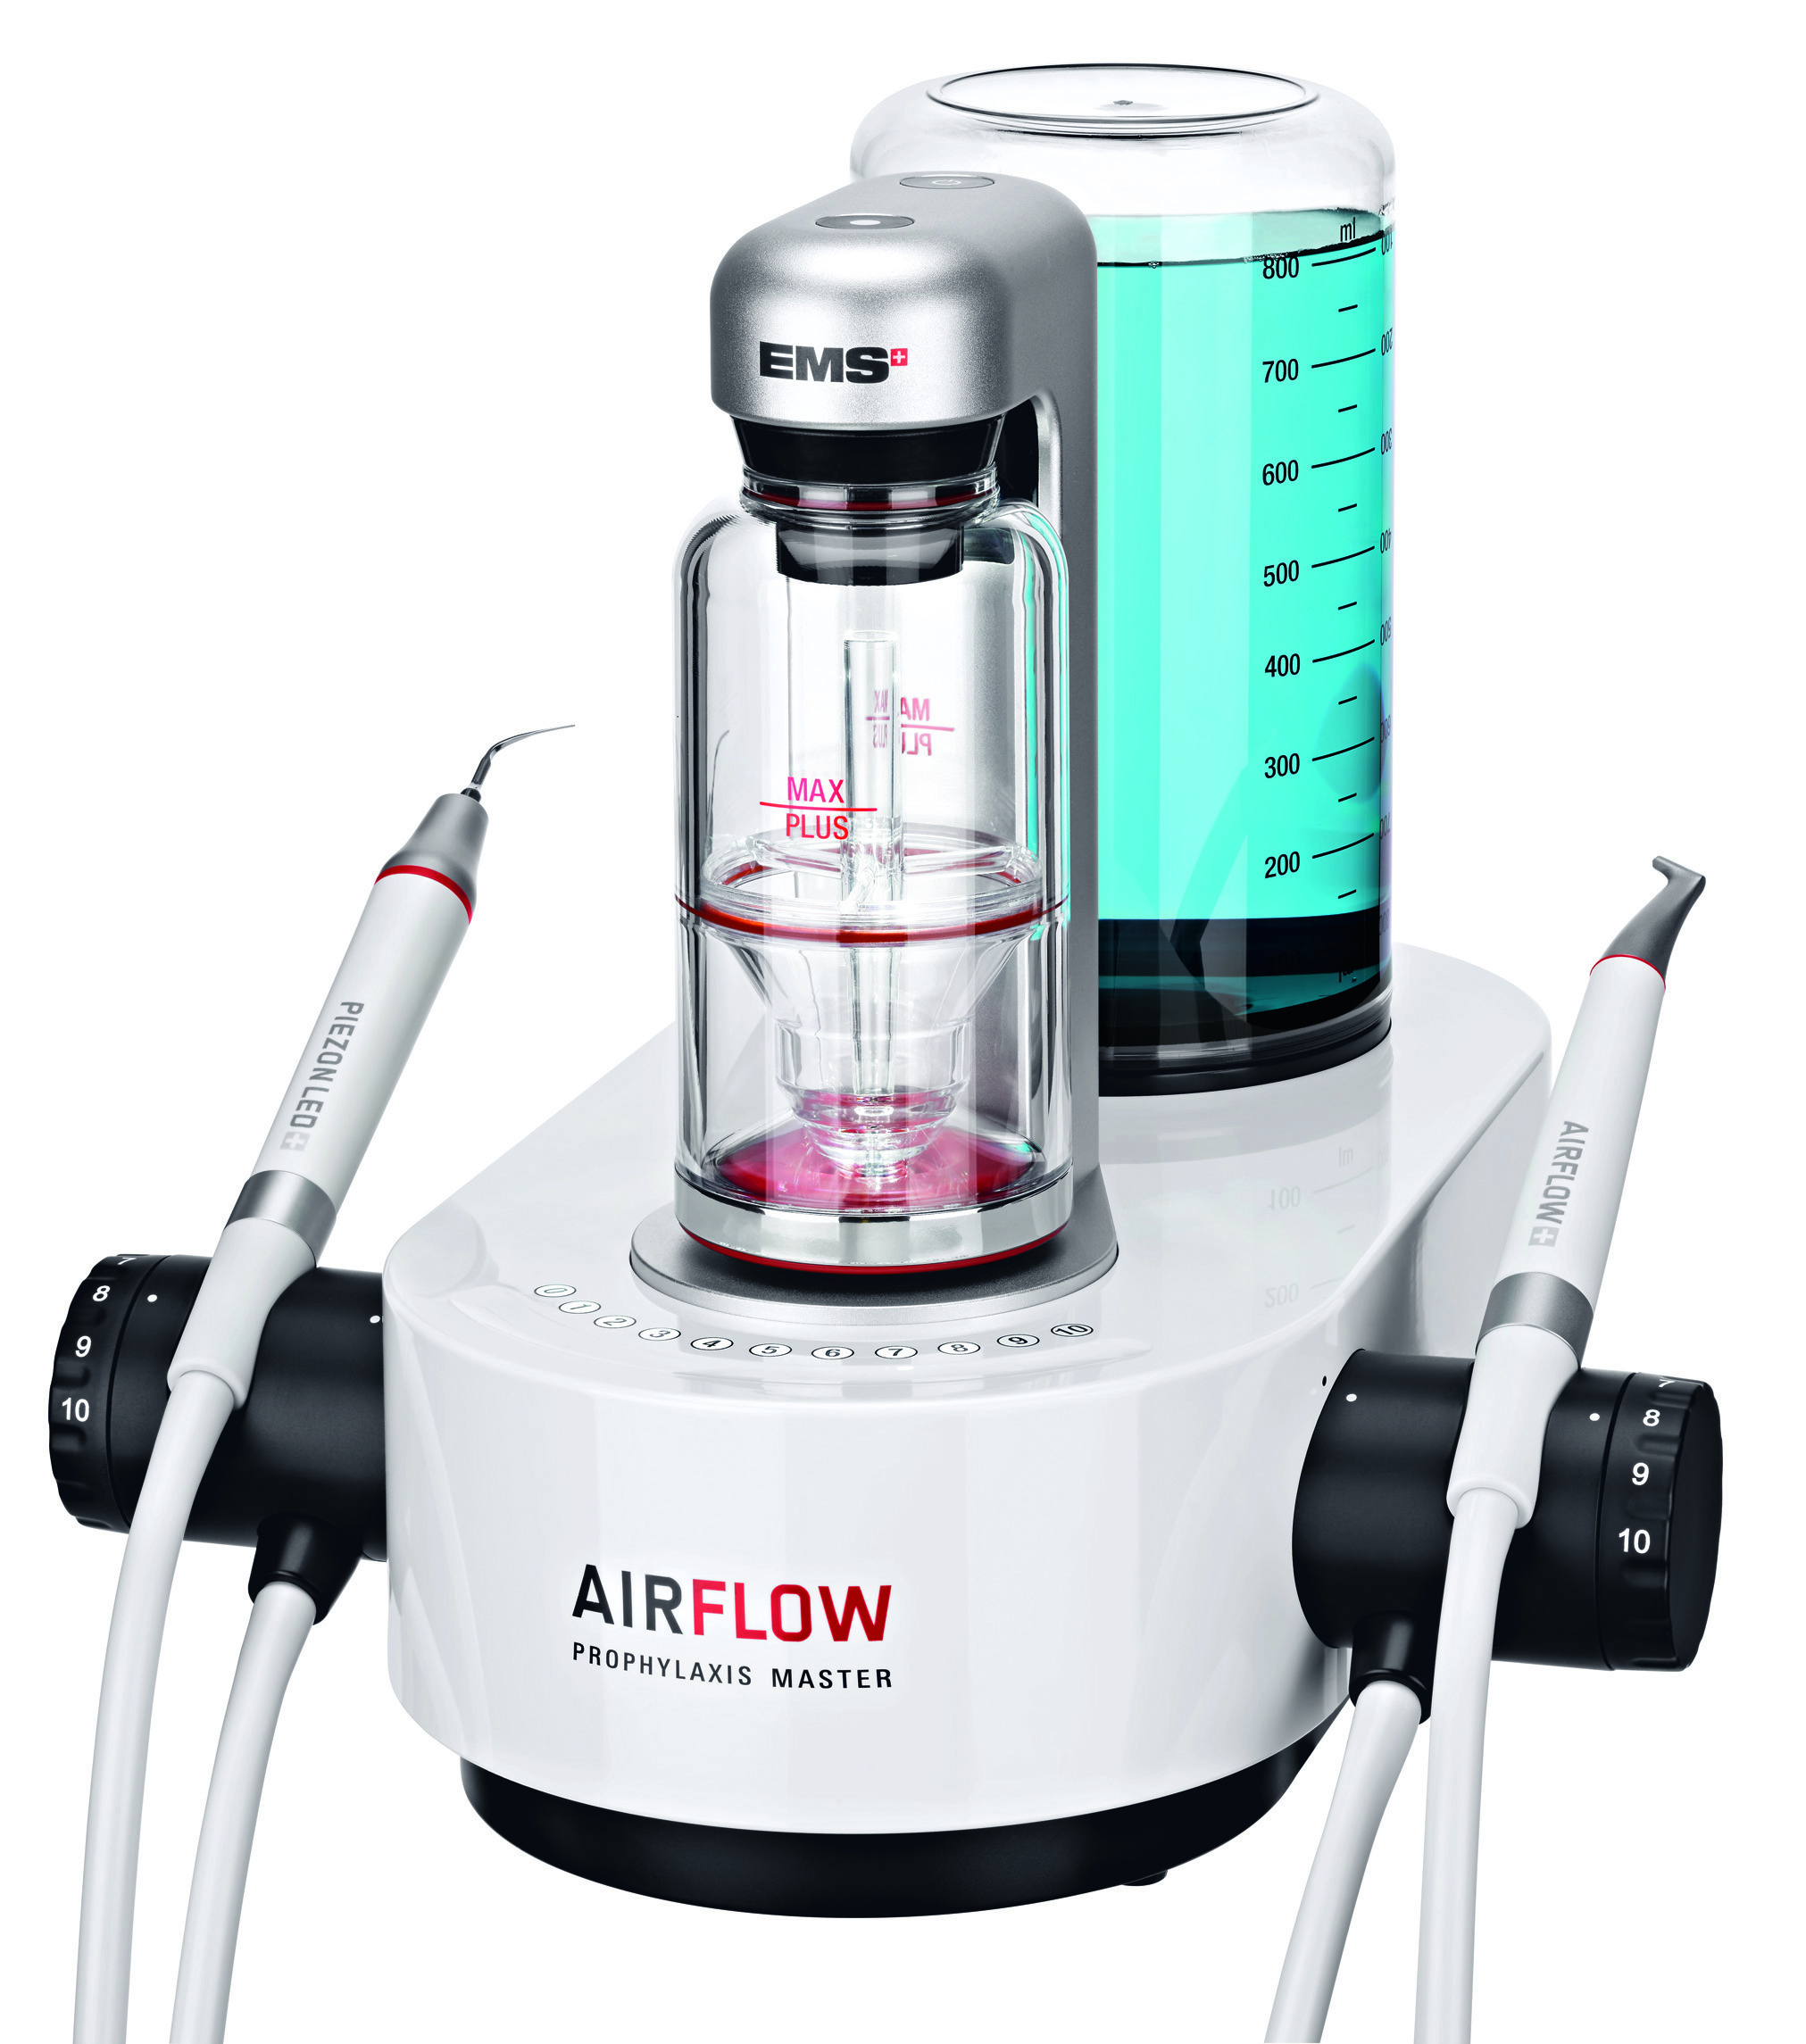 AIR-FLOW Prophylaxis Master-аппарат стоматологический